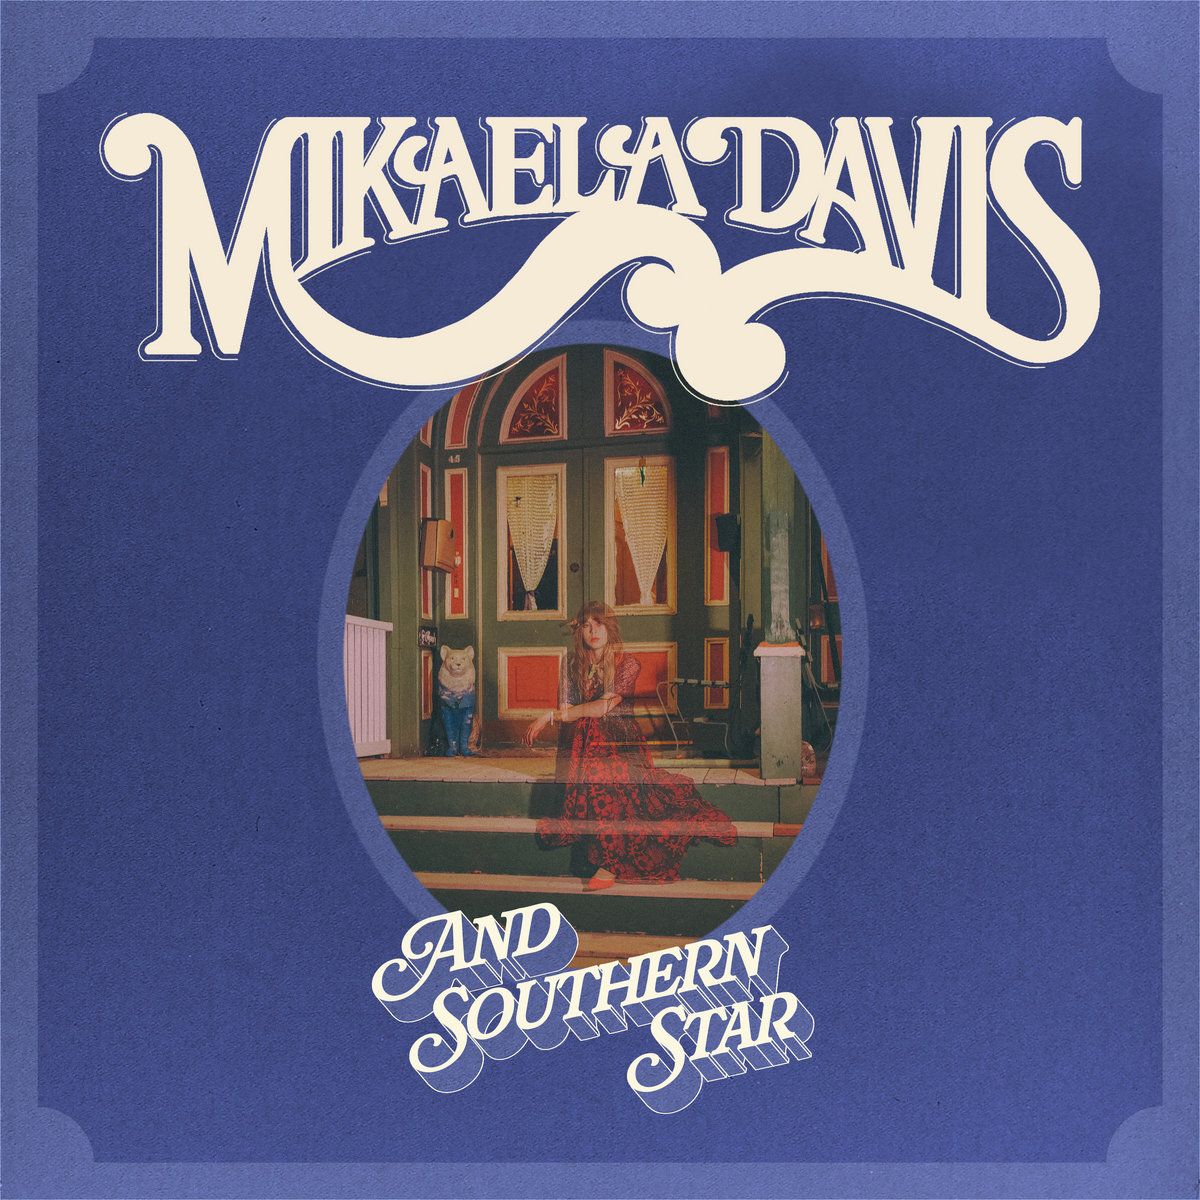 MIKAELA DAVIS / AND SOUTHERN STAR (VINYL)